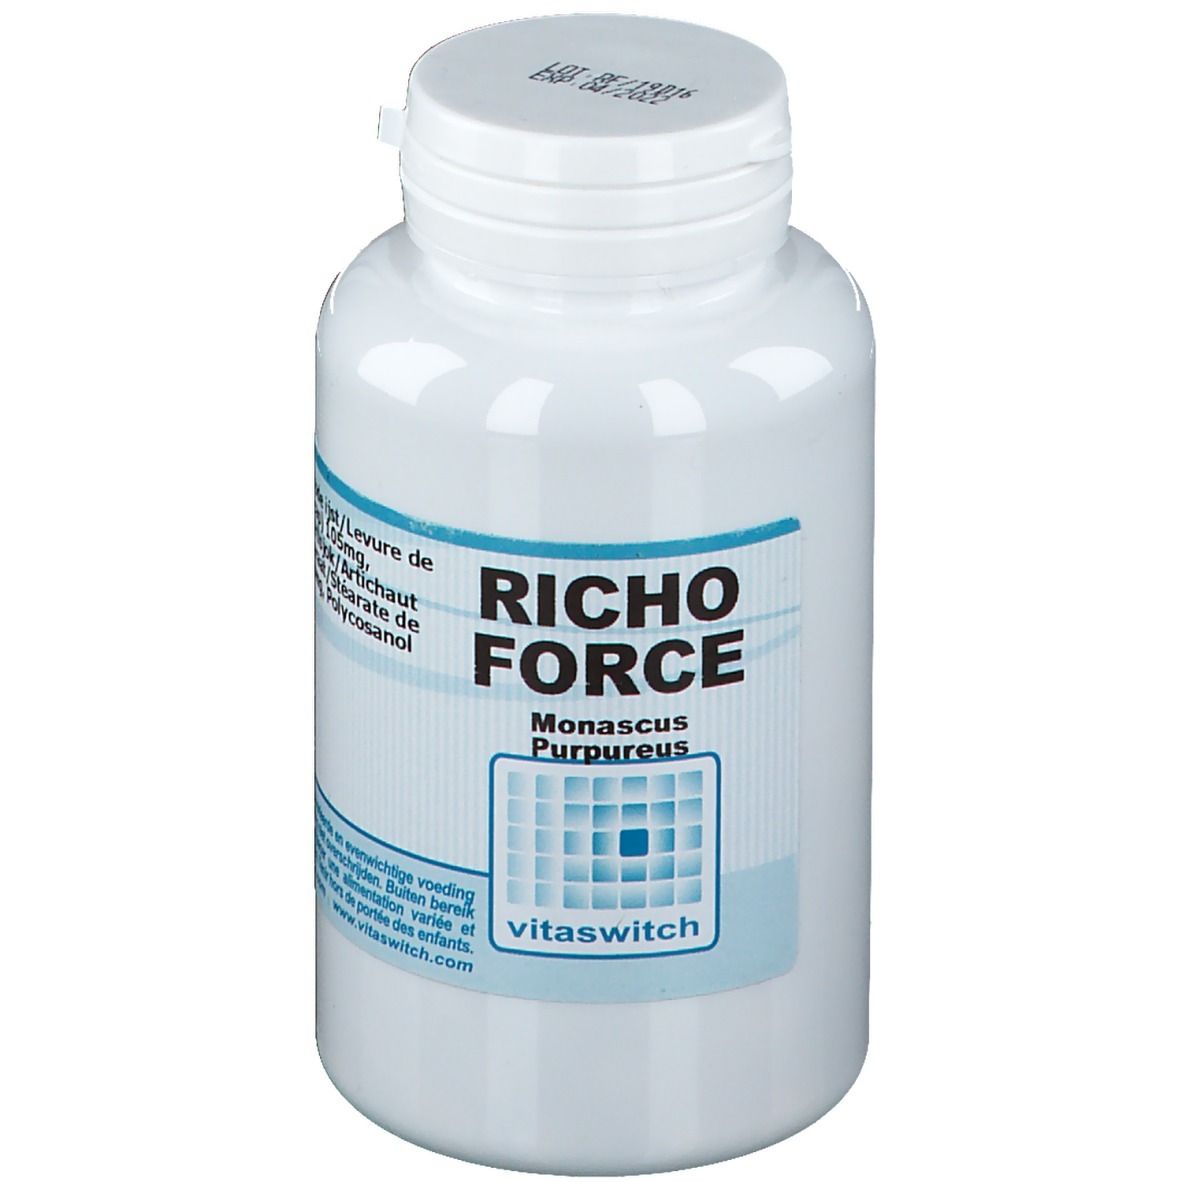 Image of vitaswitch RICHO FORCE